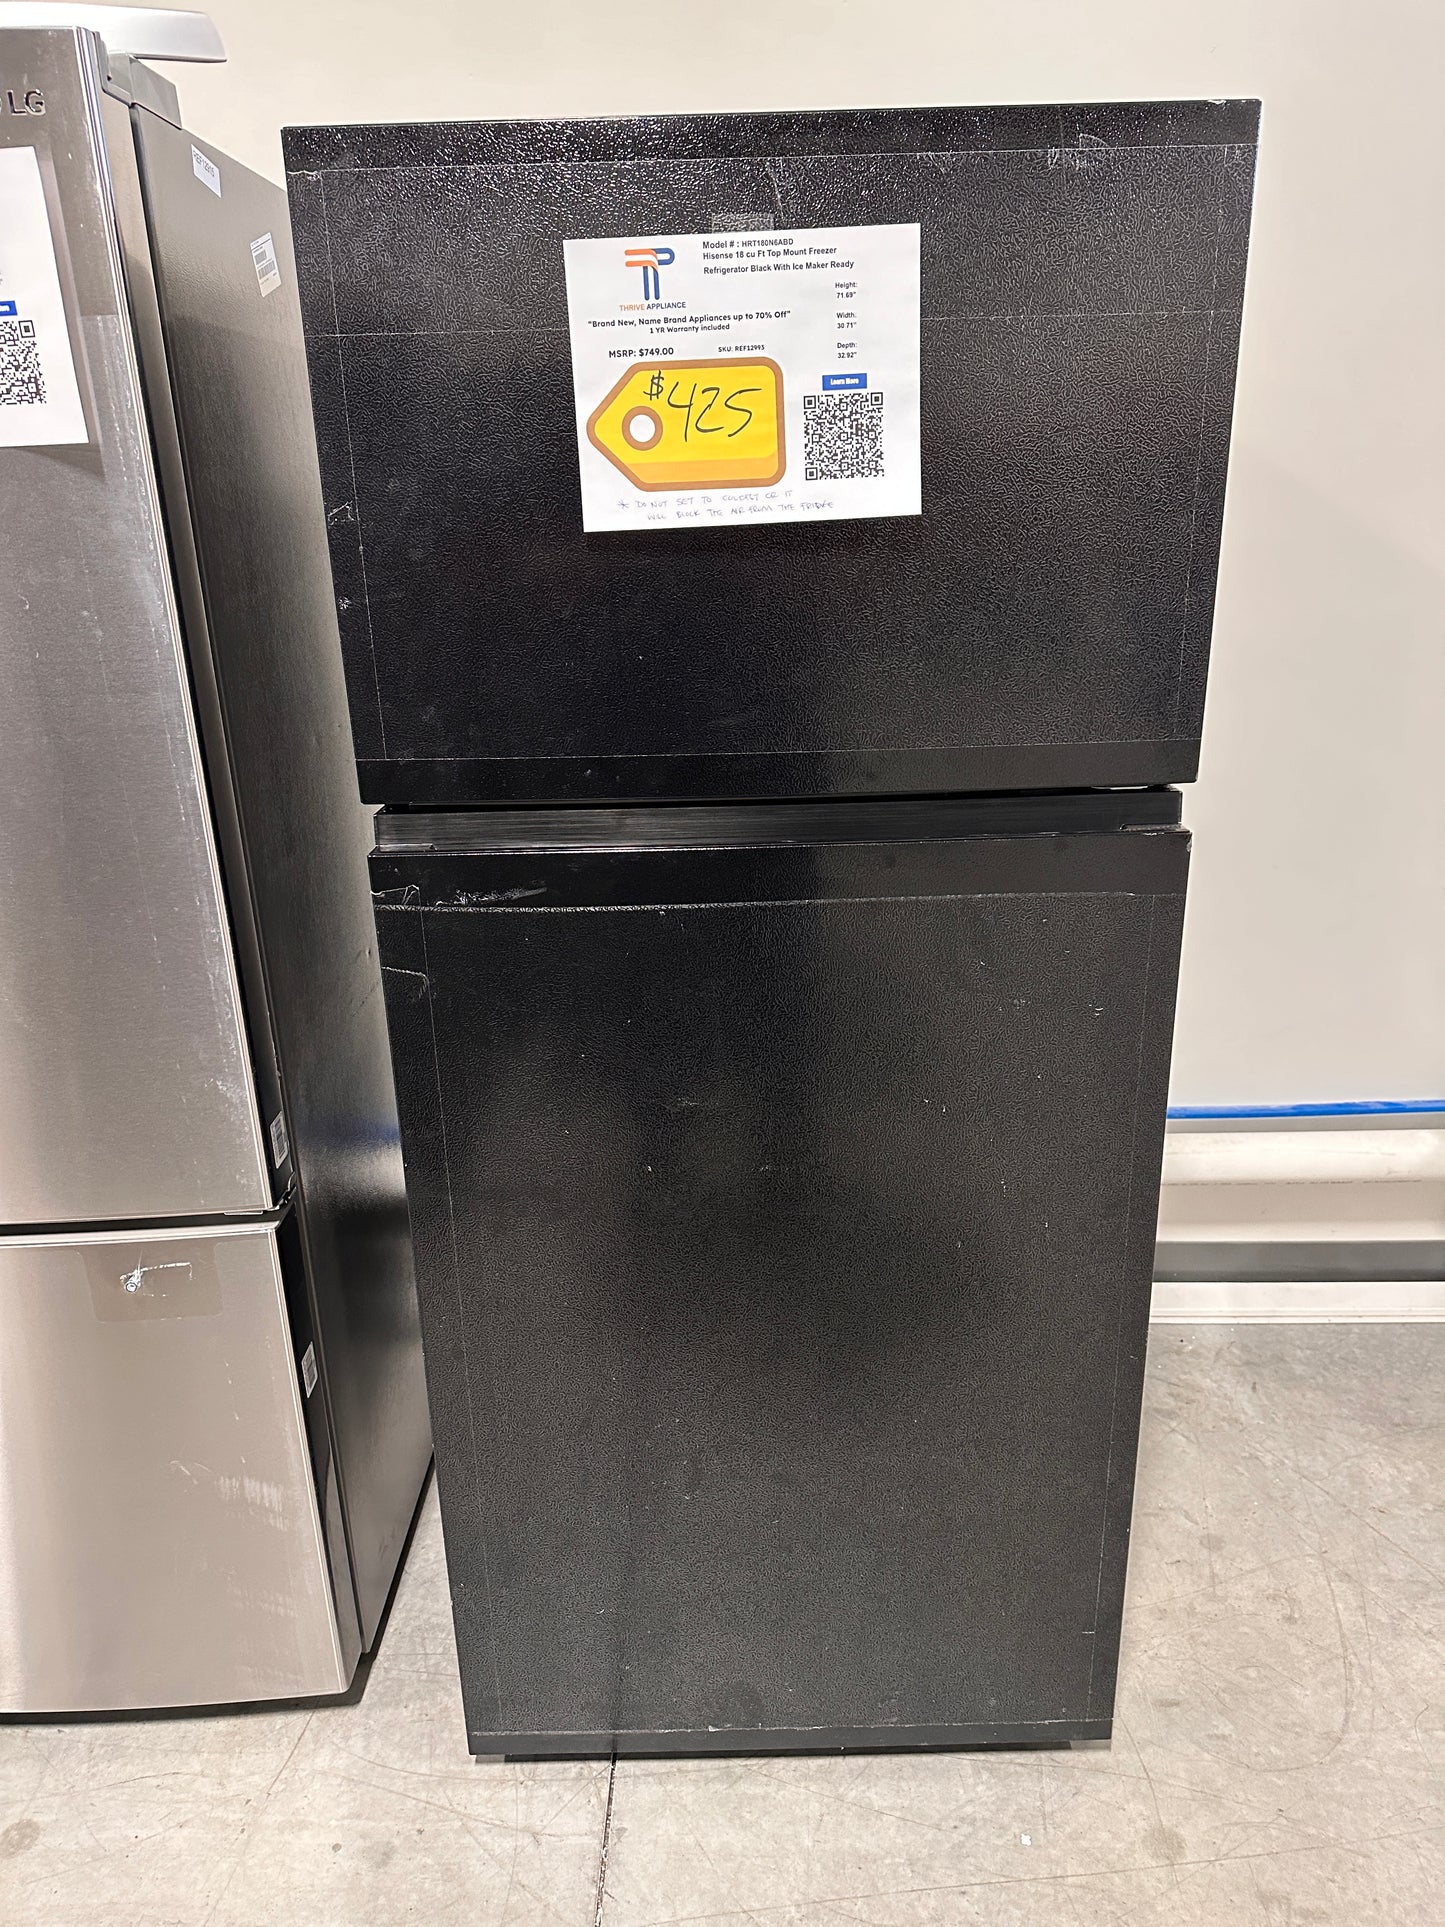 Hisense 18-cu ft Top-Freezer Refrigerator (Black)  Model:HRT180N6ABD  REF12993